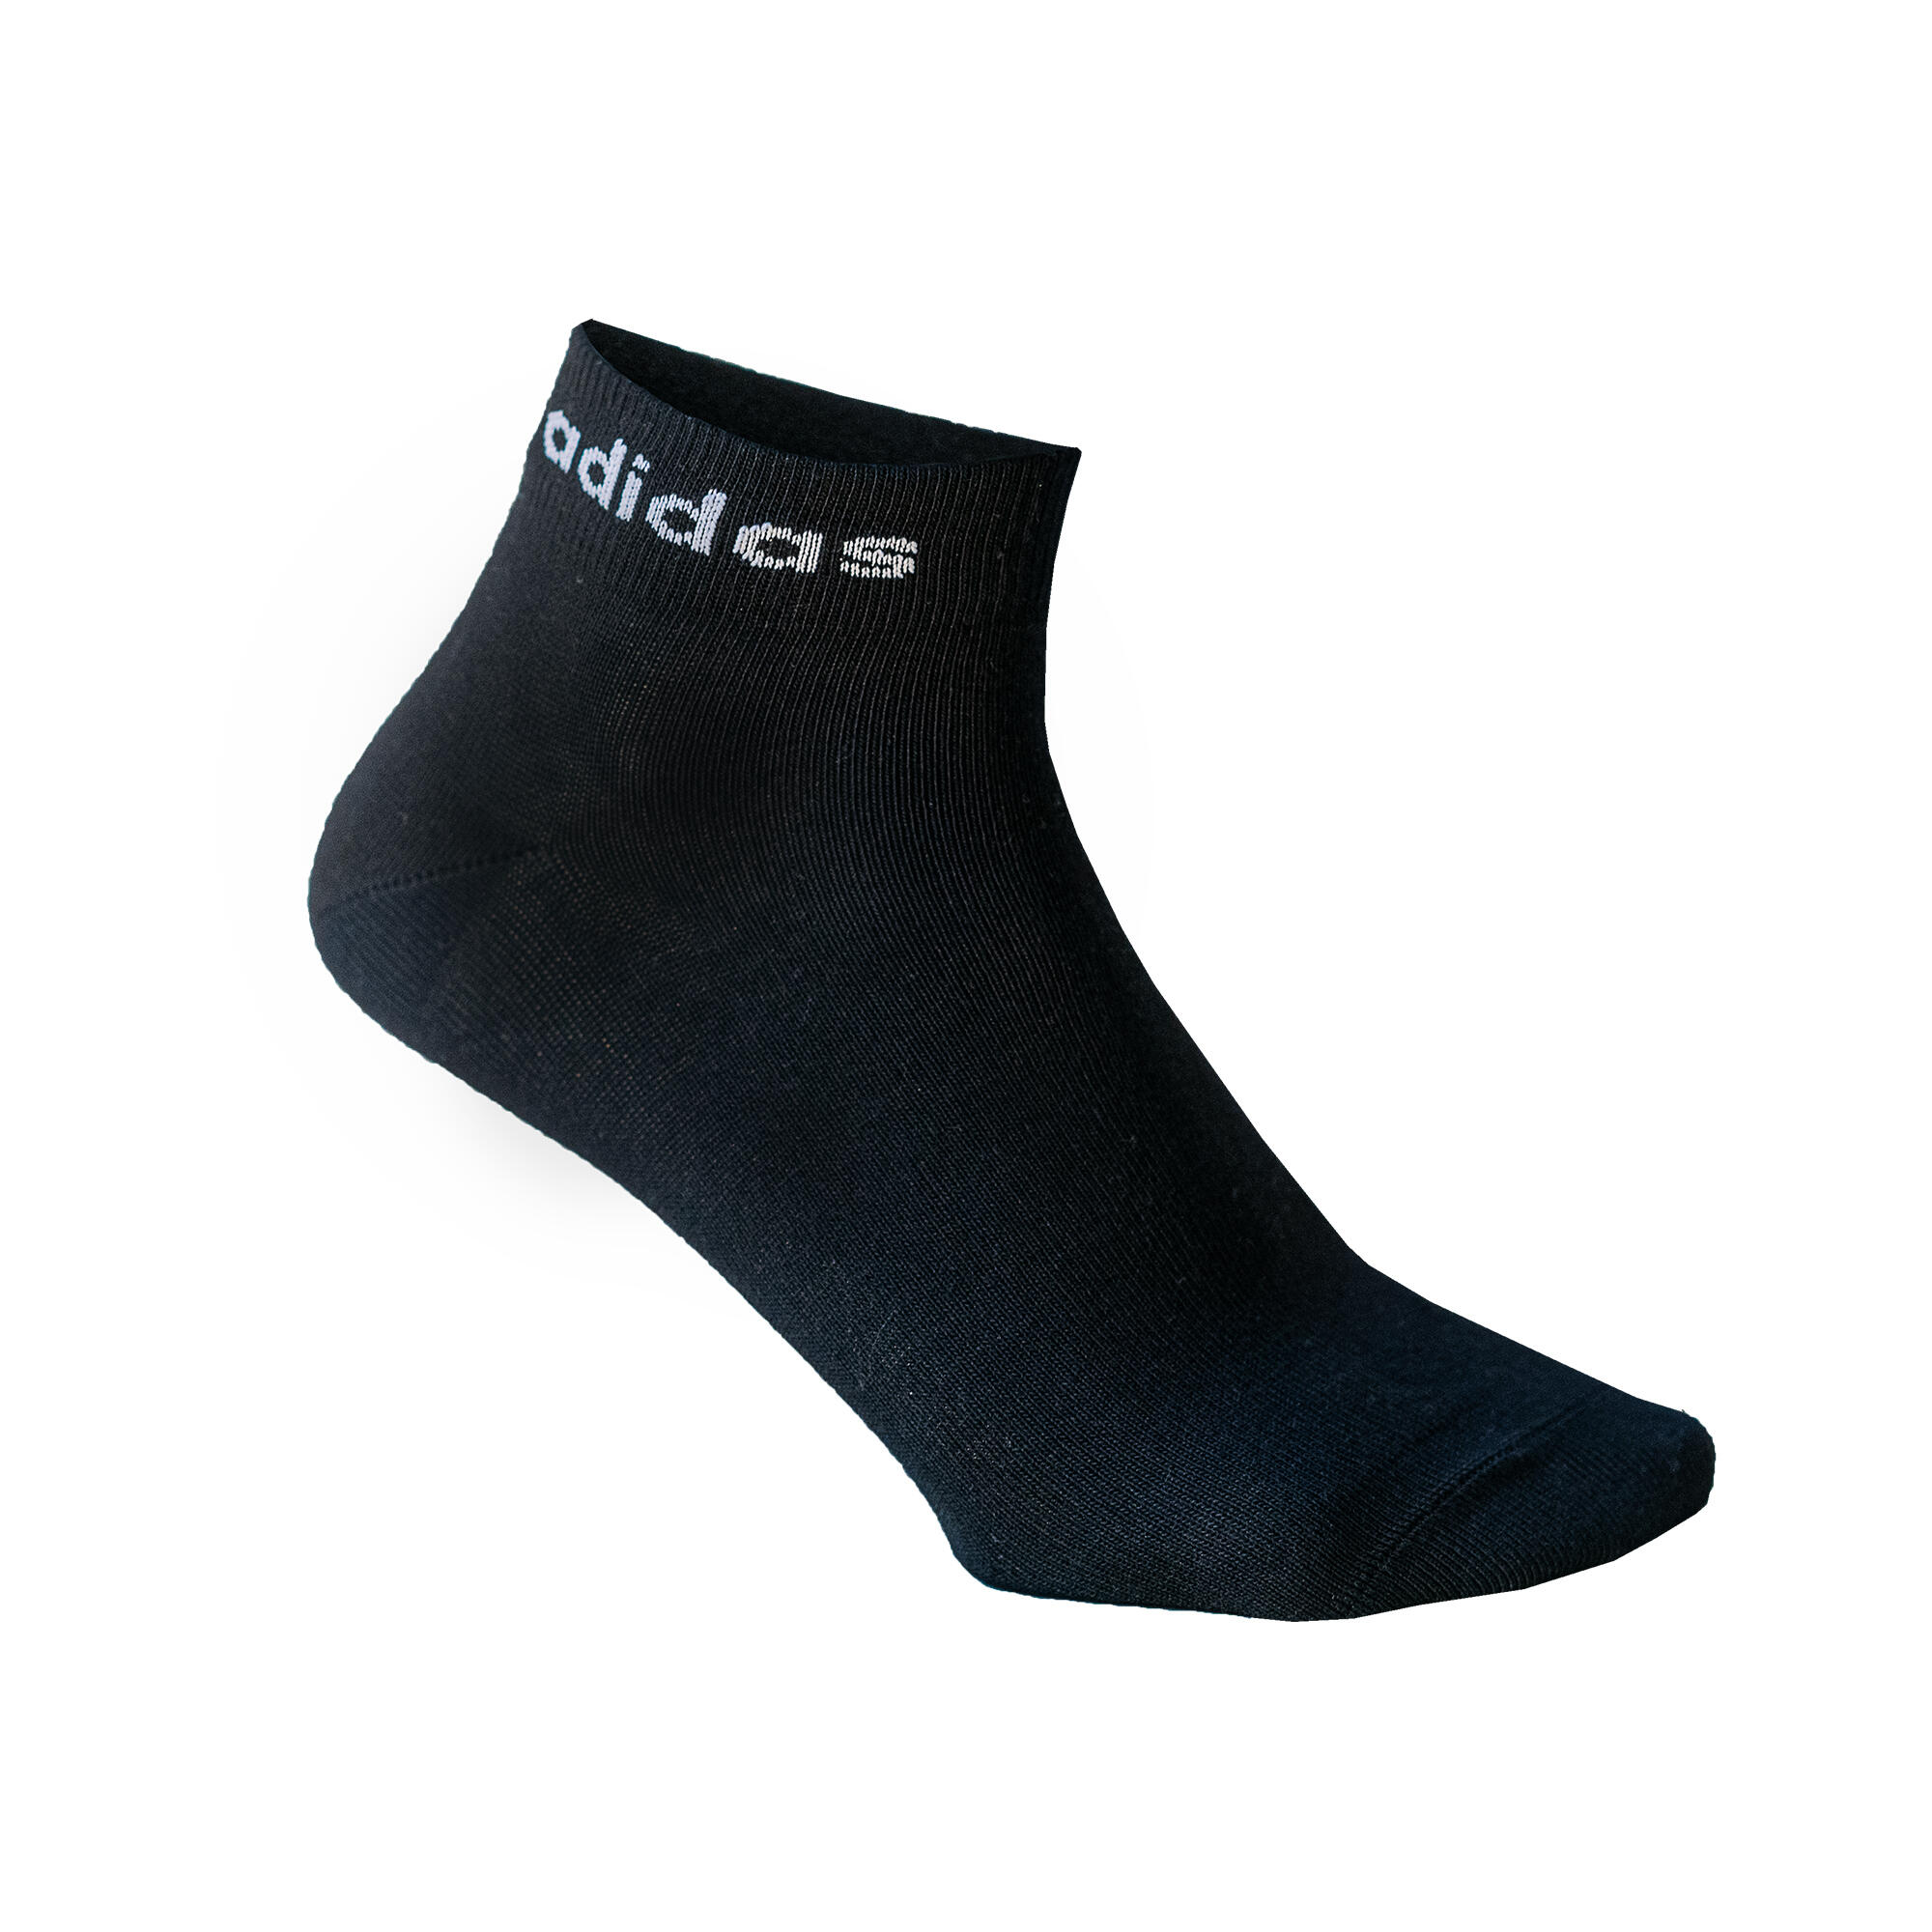 Thin Mid Sports Socks Tri-Pack - Black/White/Grey 4/5